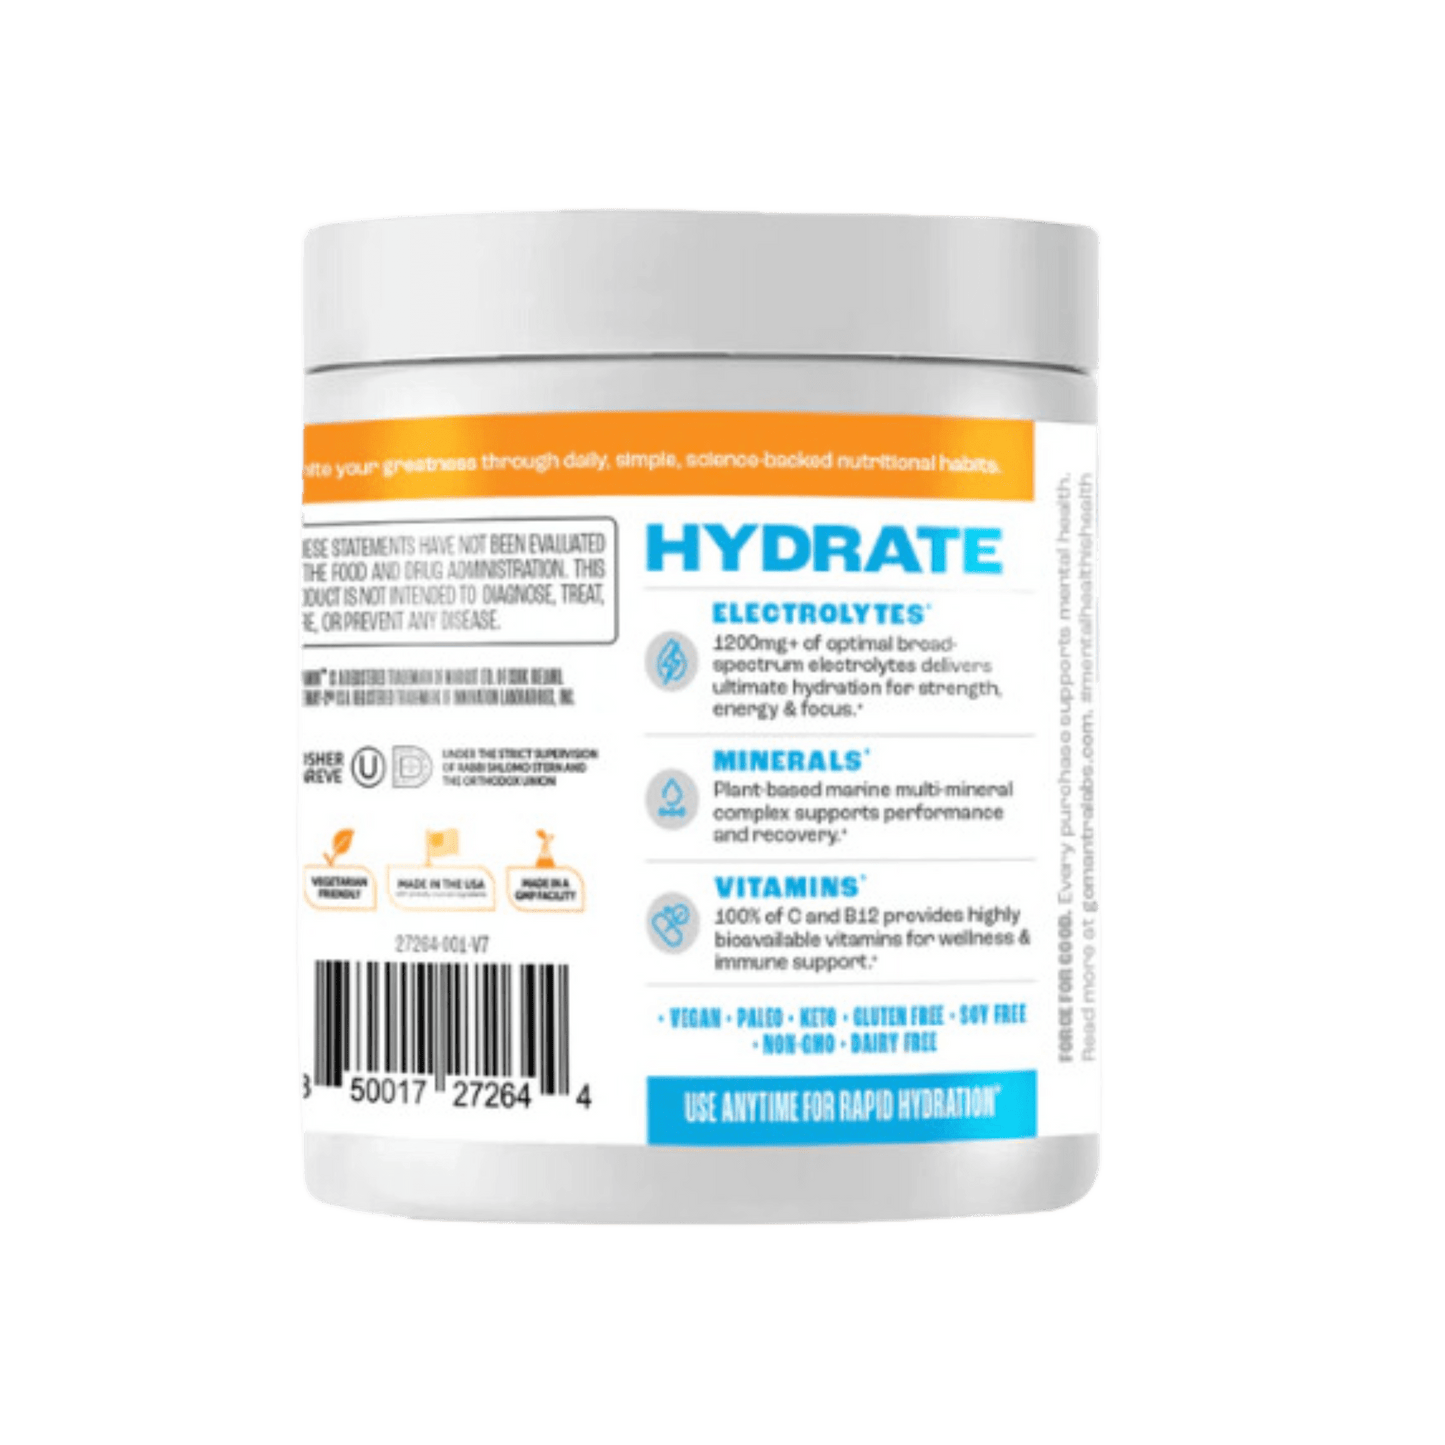 Mantra Labs Hydrate powder